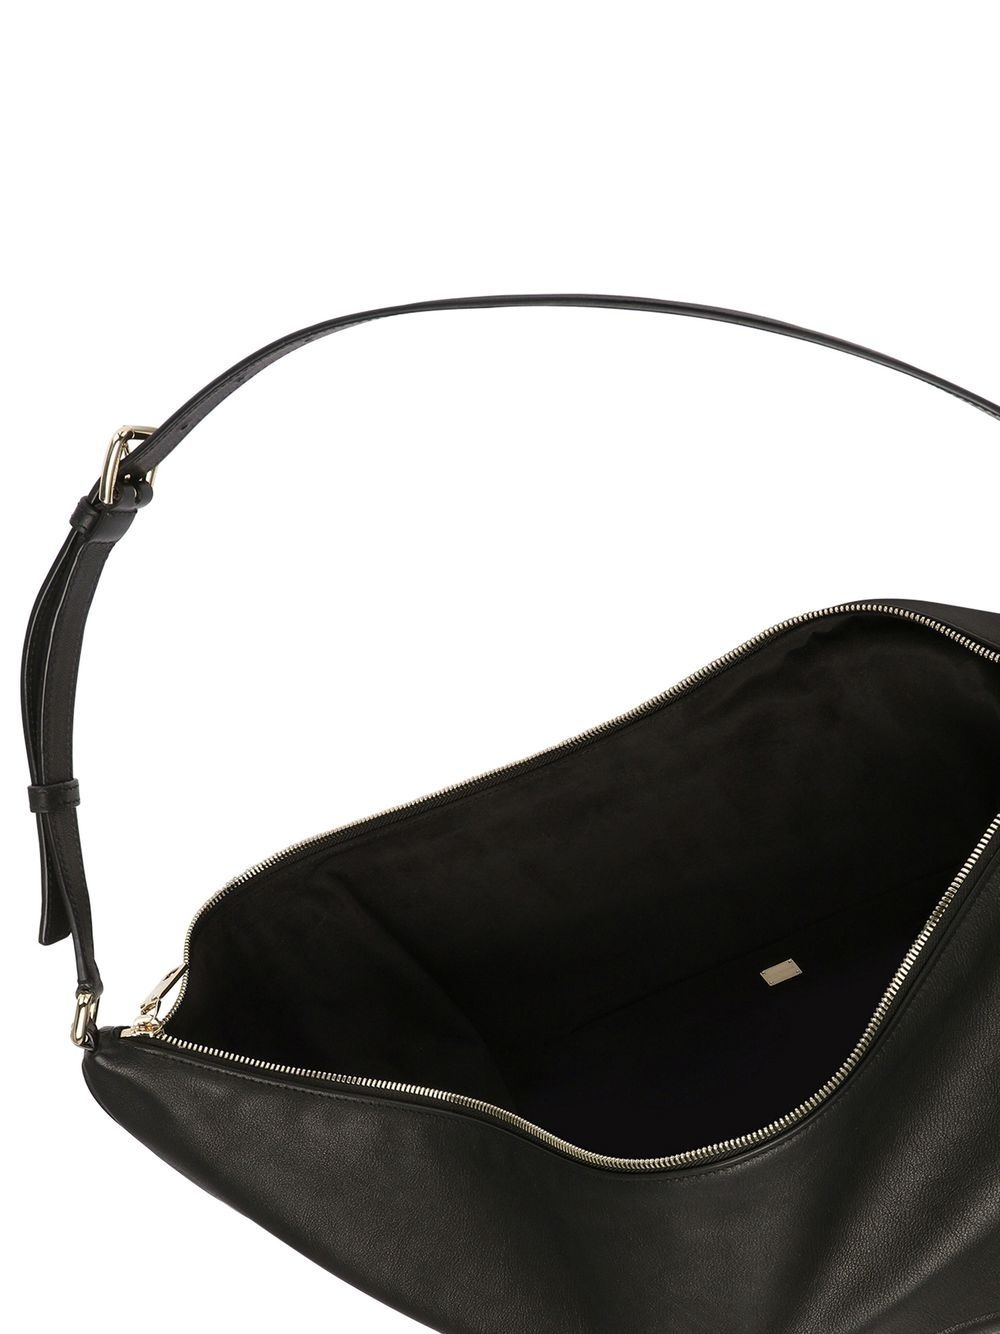 half-moon shoulder bag - 5